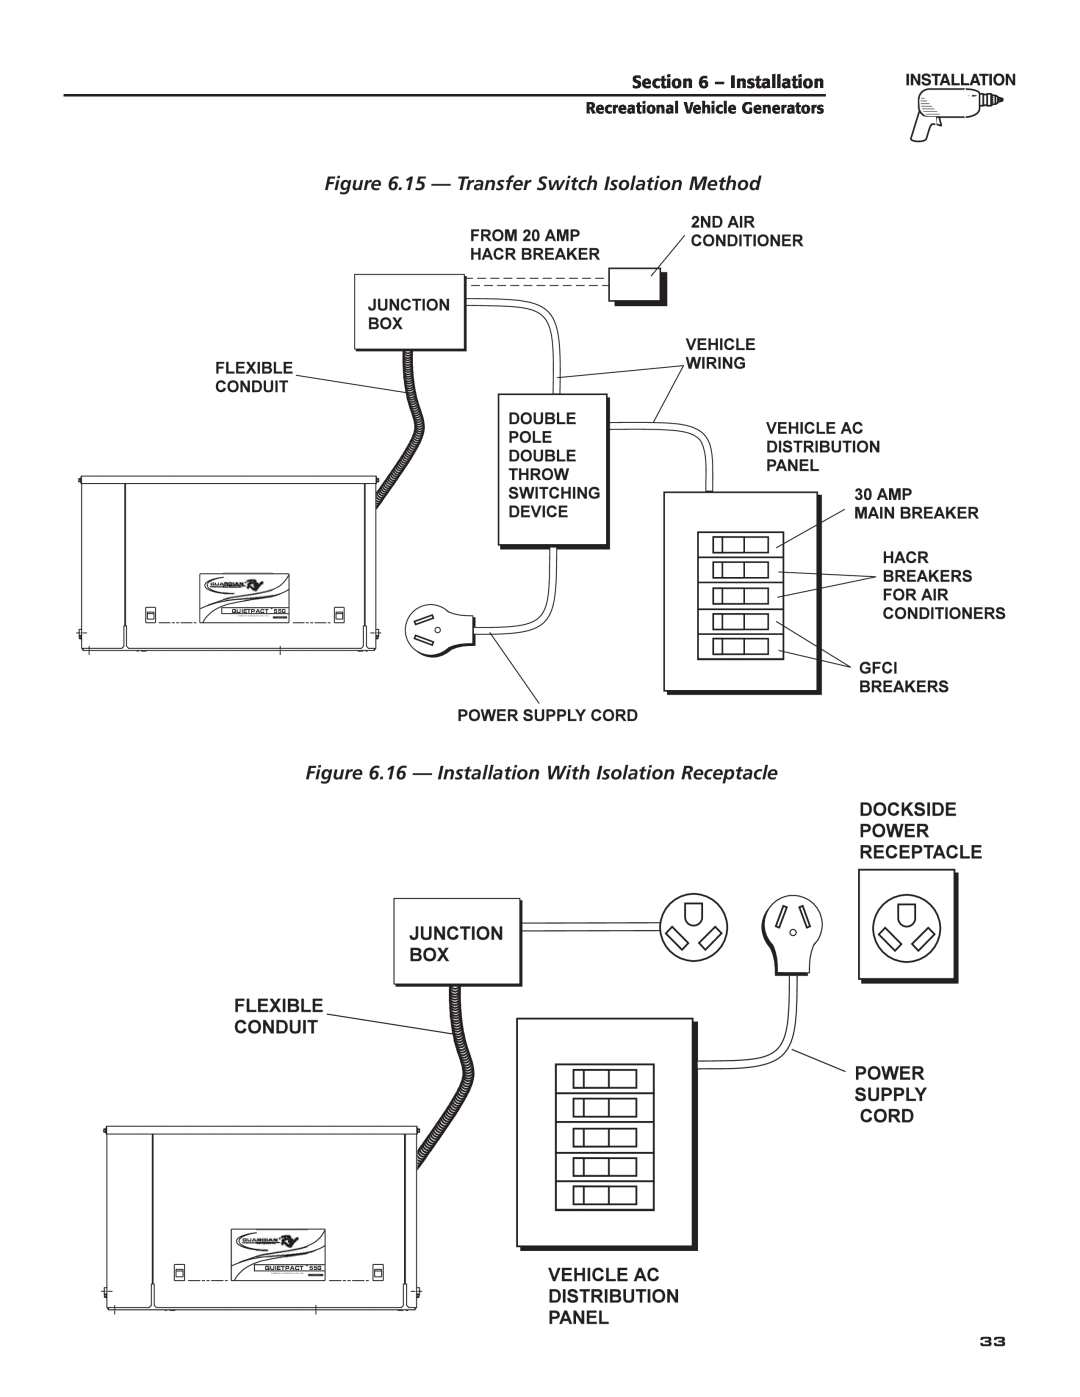 Guardian Technologies 004702-0, 004703-0, 004704-0, 004705-0, 004706-0, 004707-0 15 - Transfer Switch Isolation Method 